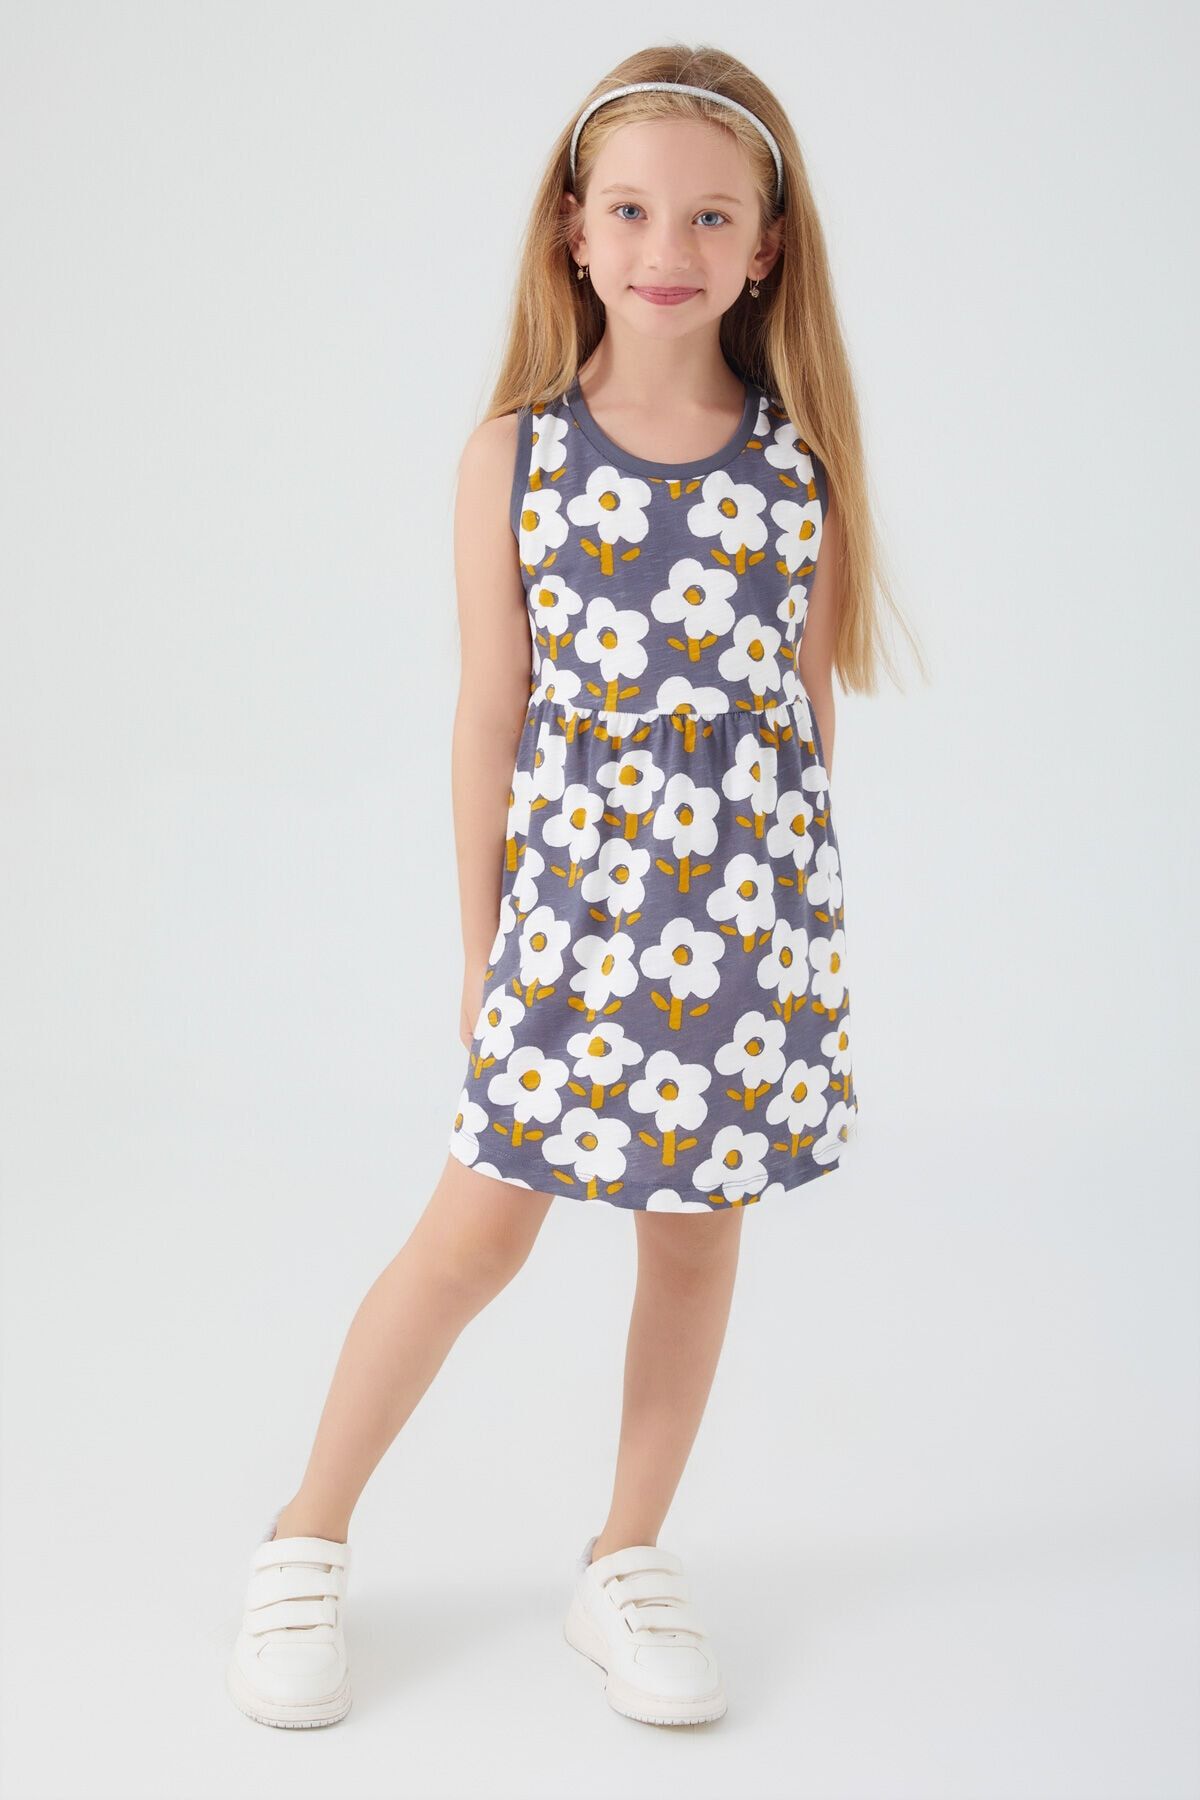 Rolypoly Rolypoly Florals Antrasit Kız Çocuk Elbise